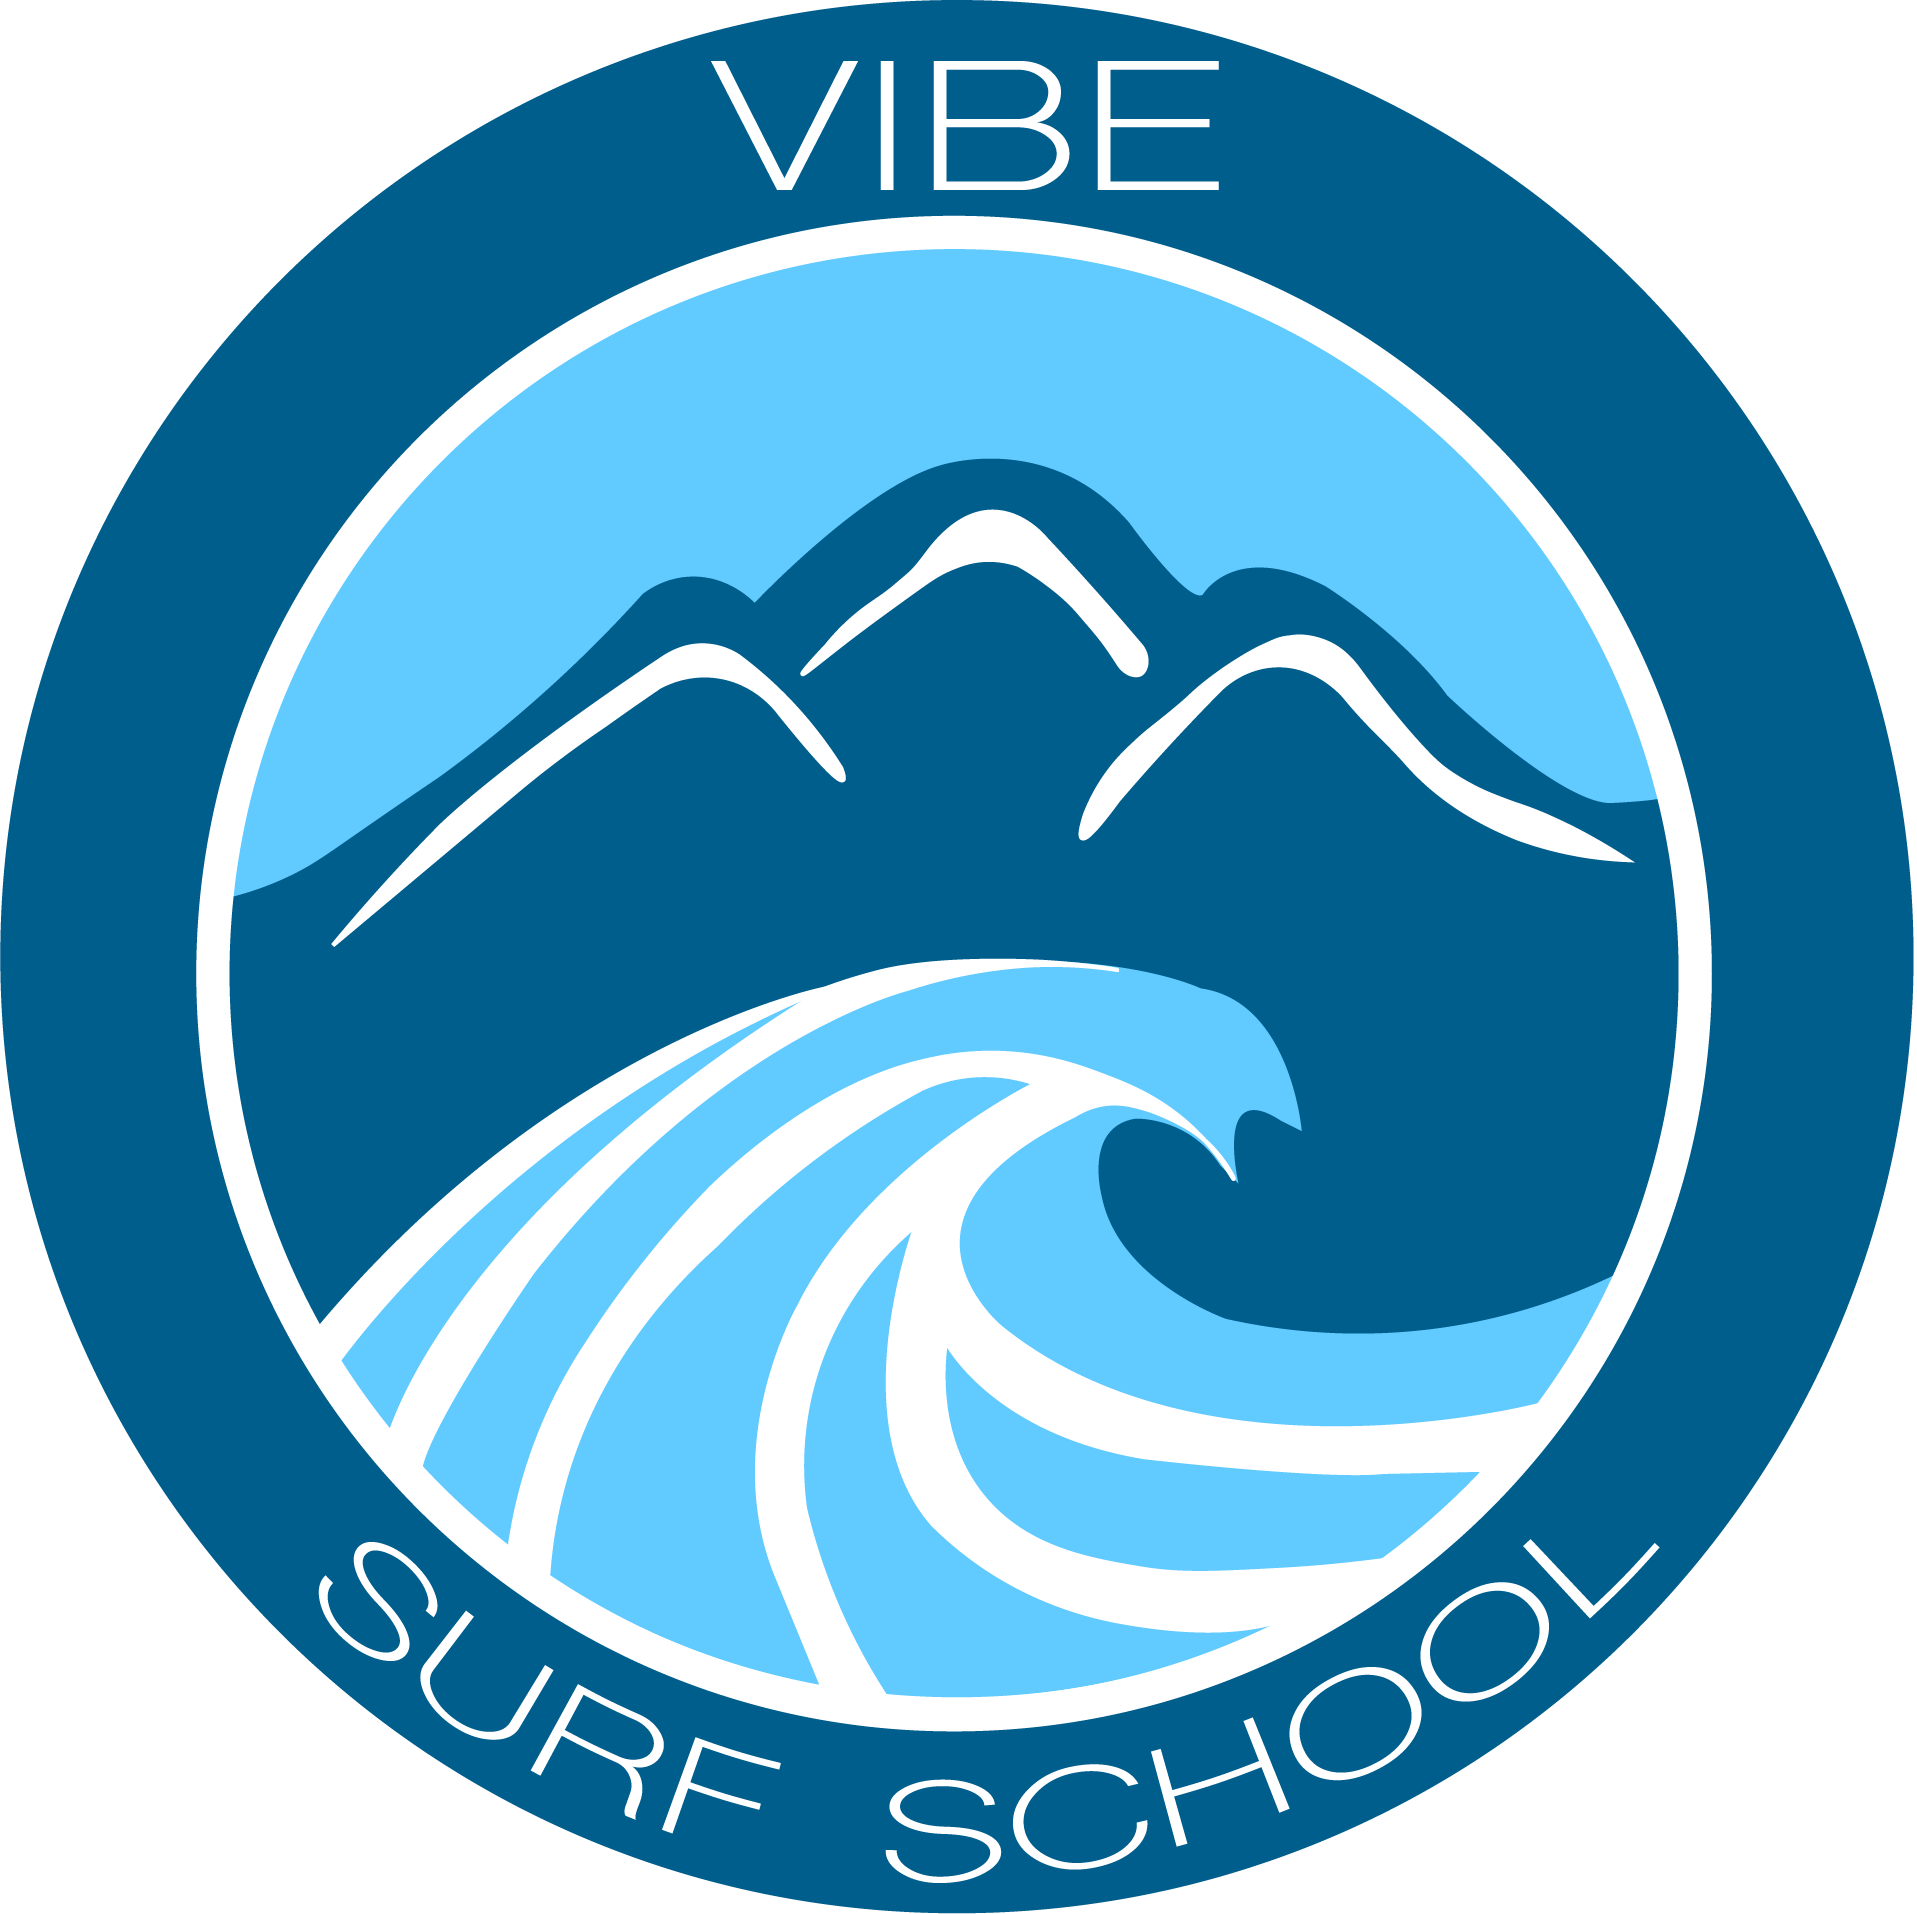 Vibe Surf School